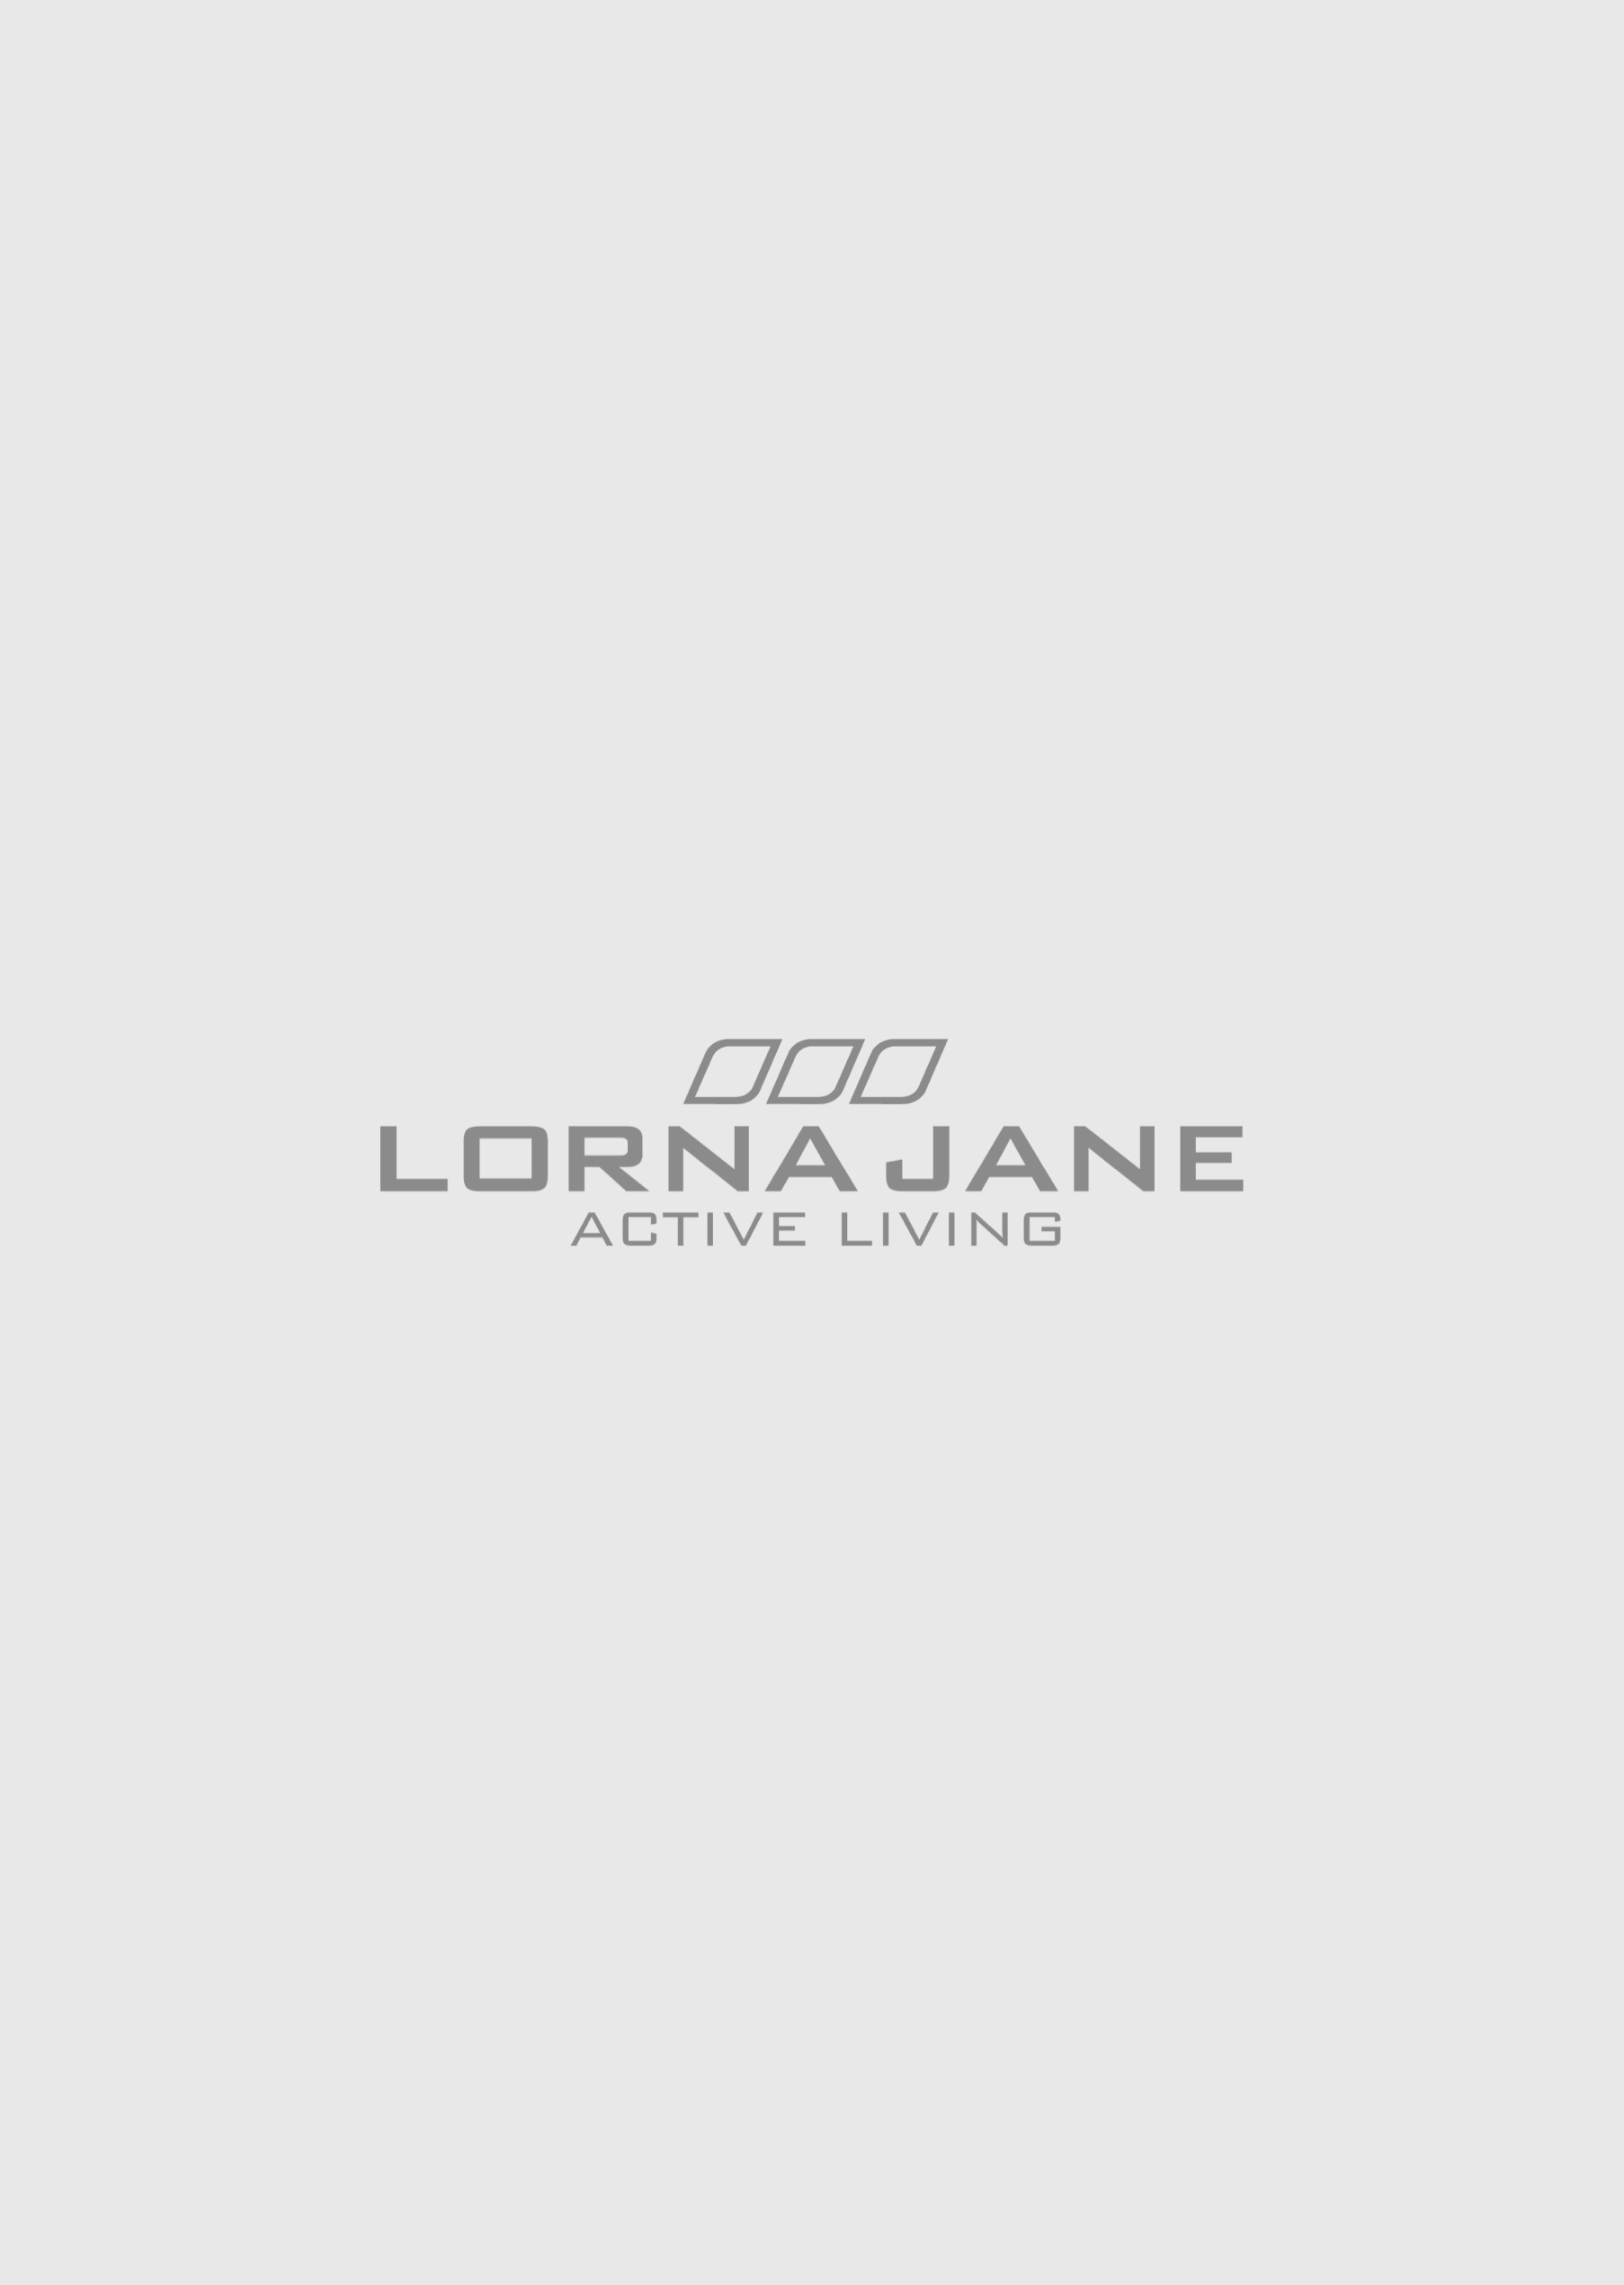 Lorna Jane - Crunchbase Company Profile & Funding